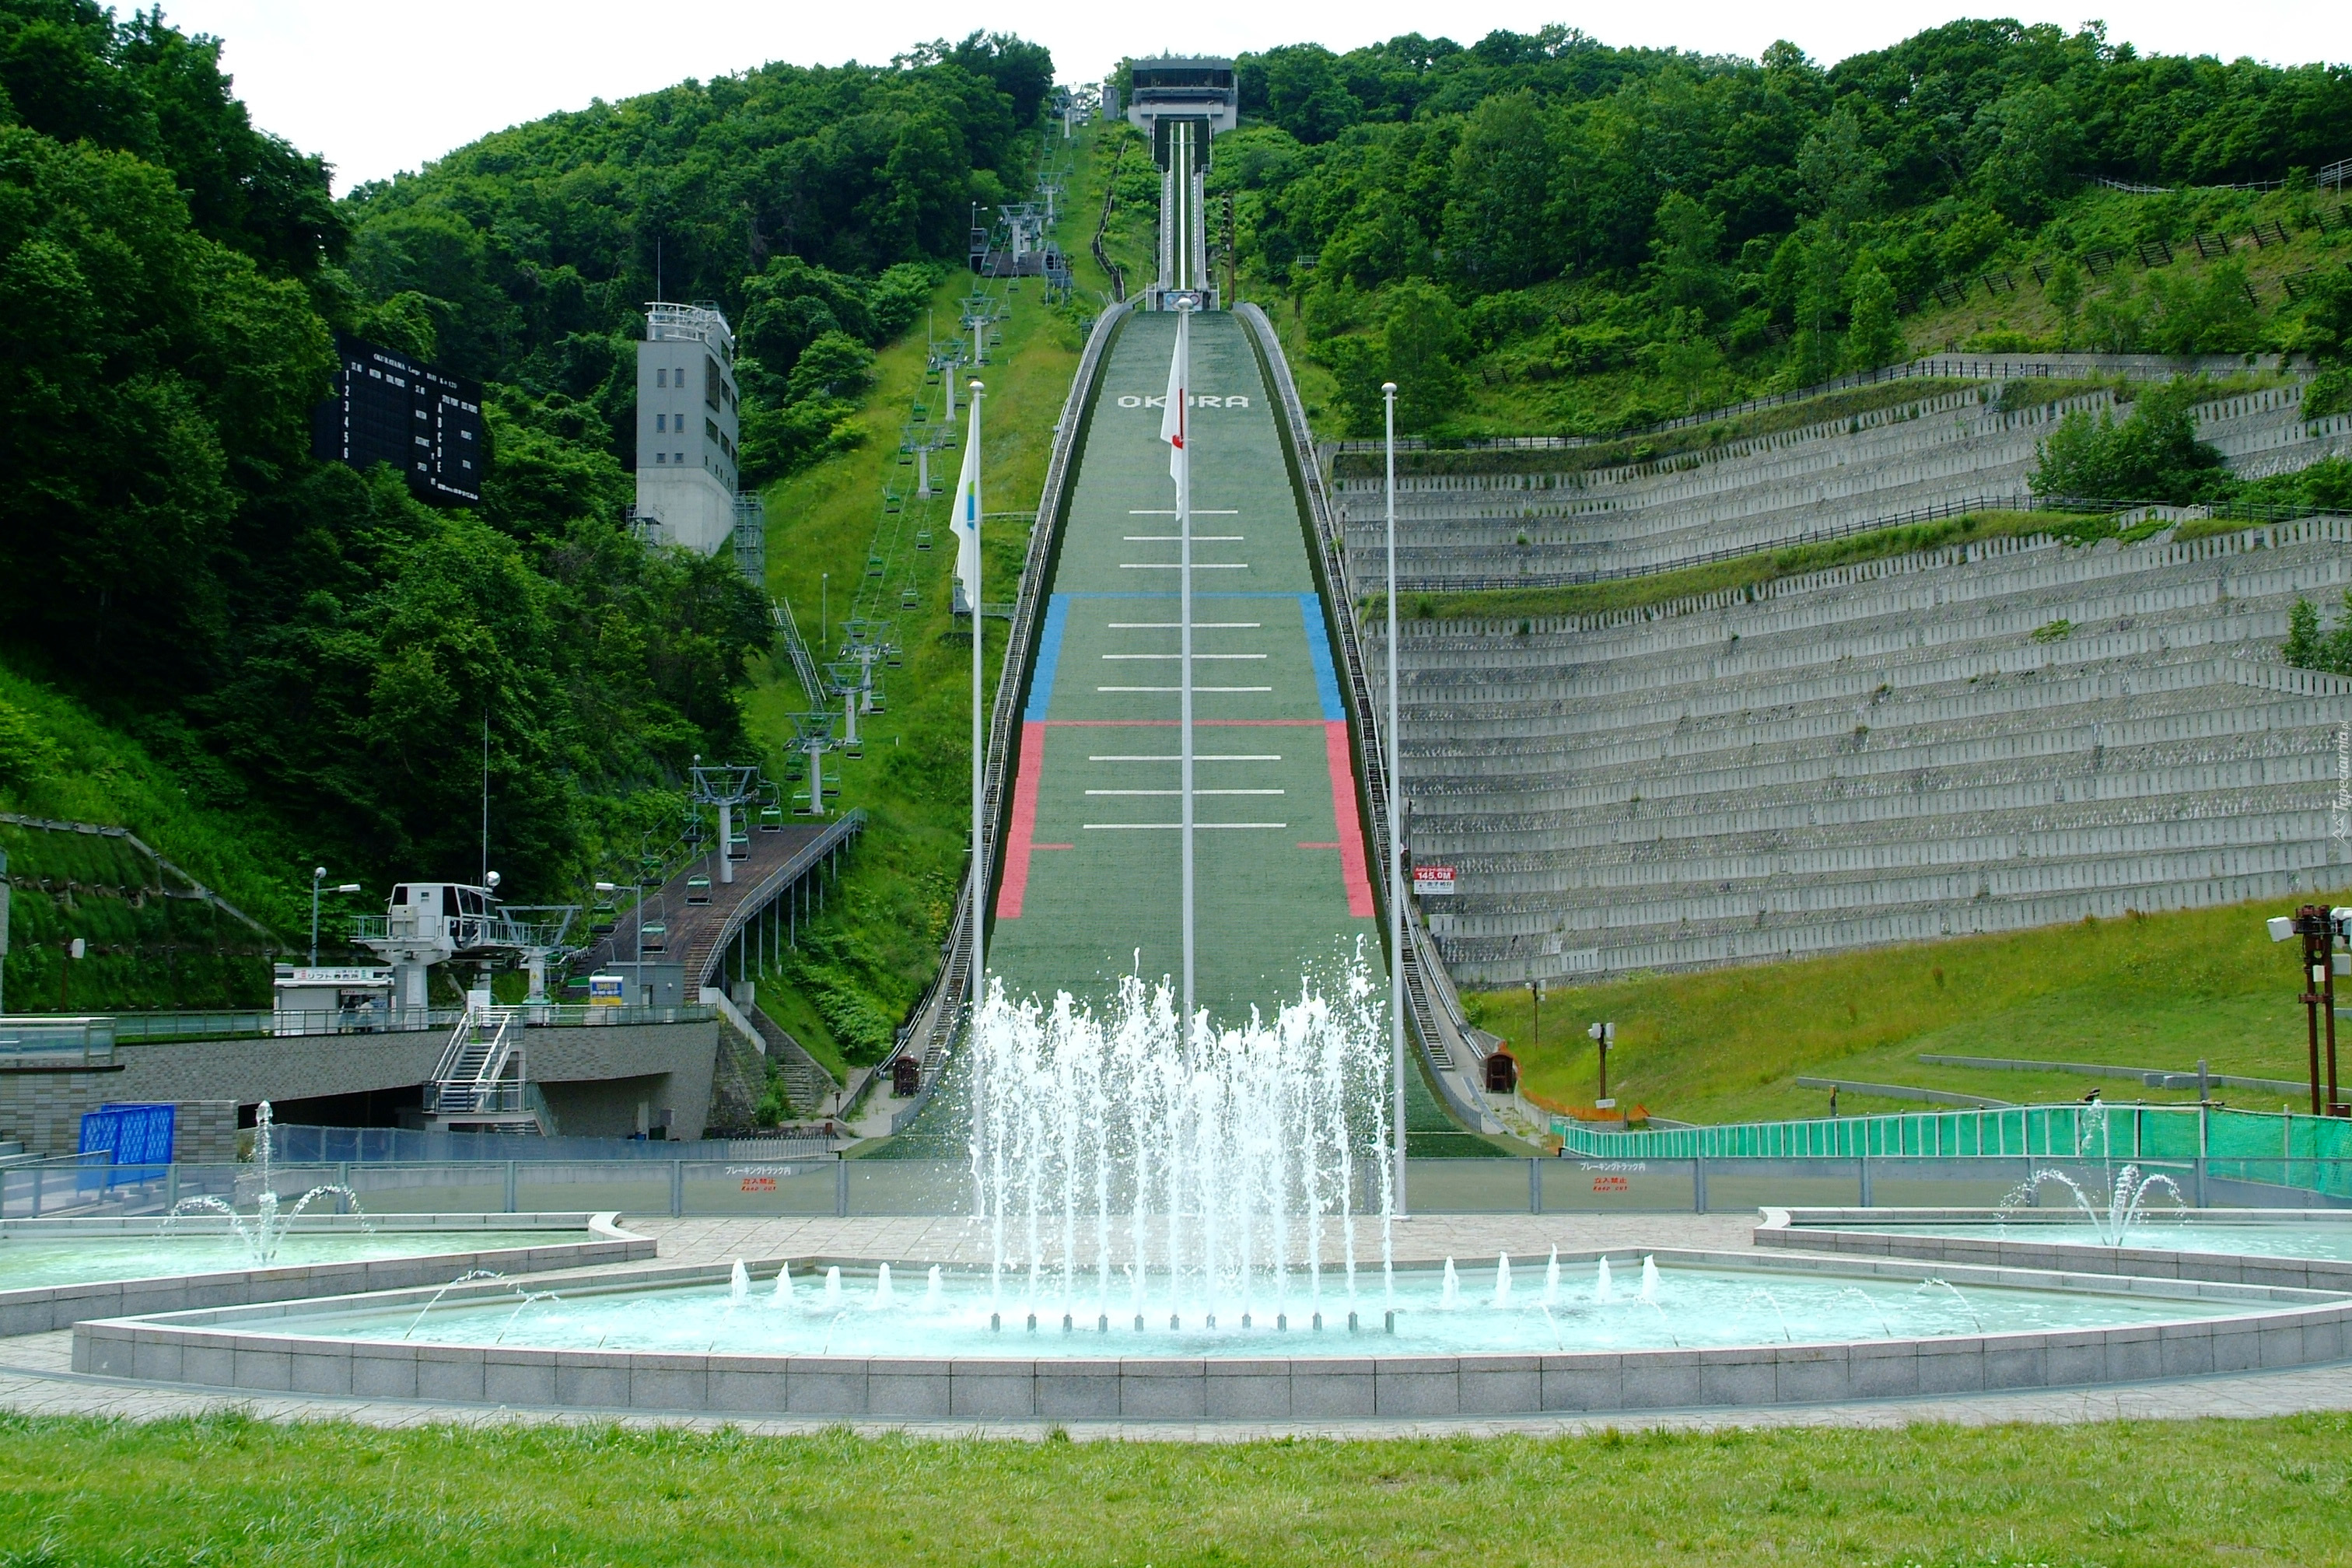 Skocznia narciarska, Okurayama, Sapporo, Japonia, fontanna